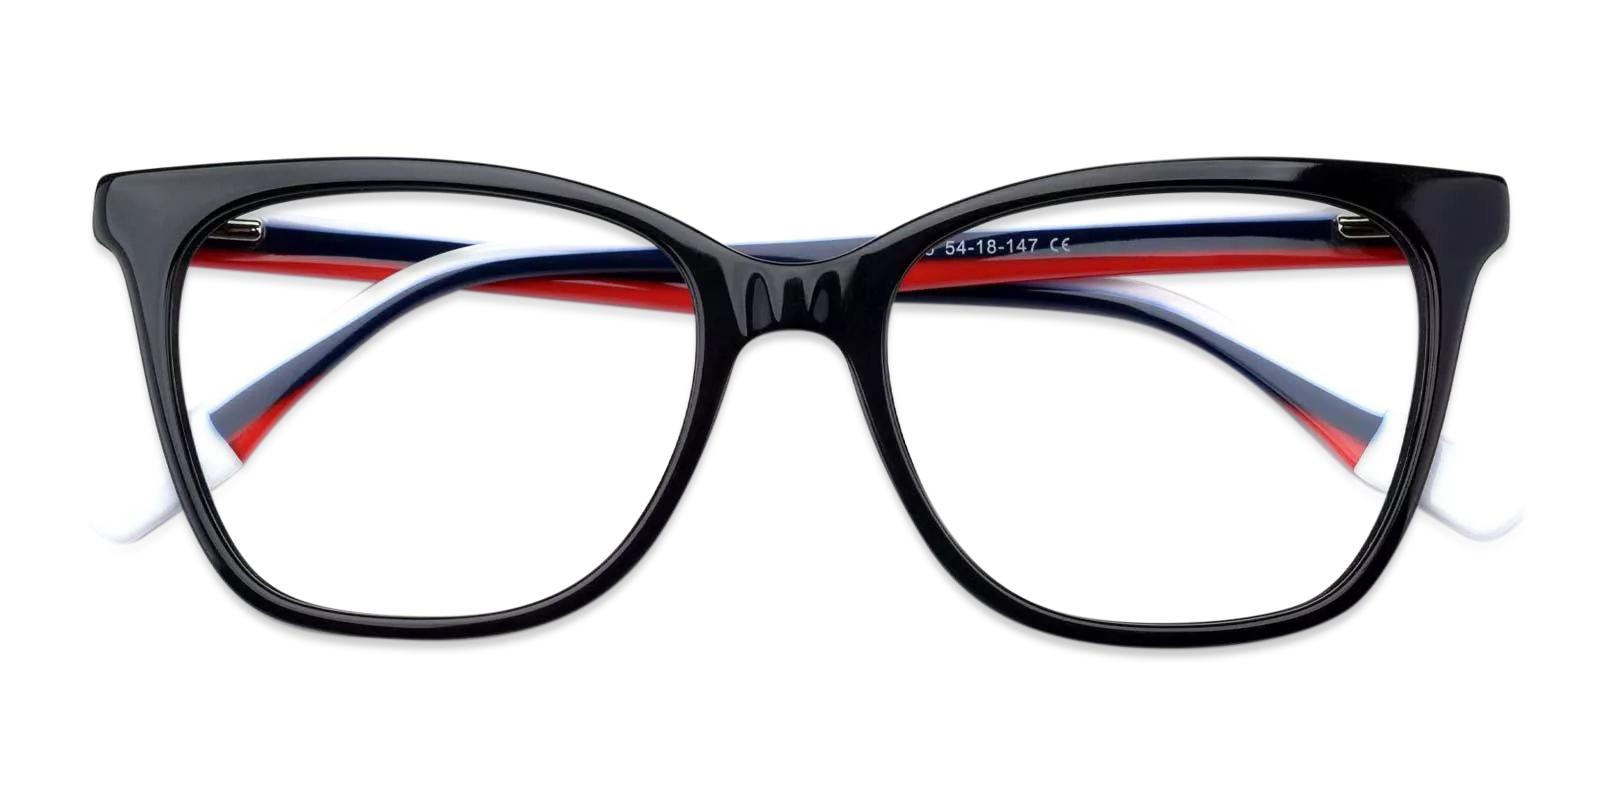 Pamela Black Acetate Eyeglasses , Fashion , SpringHinges , UniversalBridgeFit Frames from ABBE Glasses